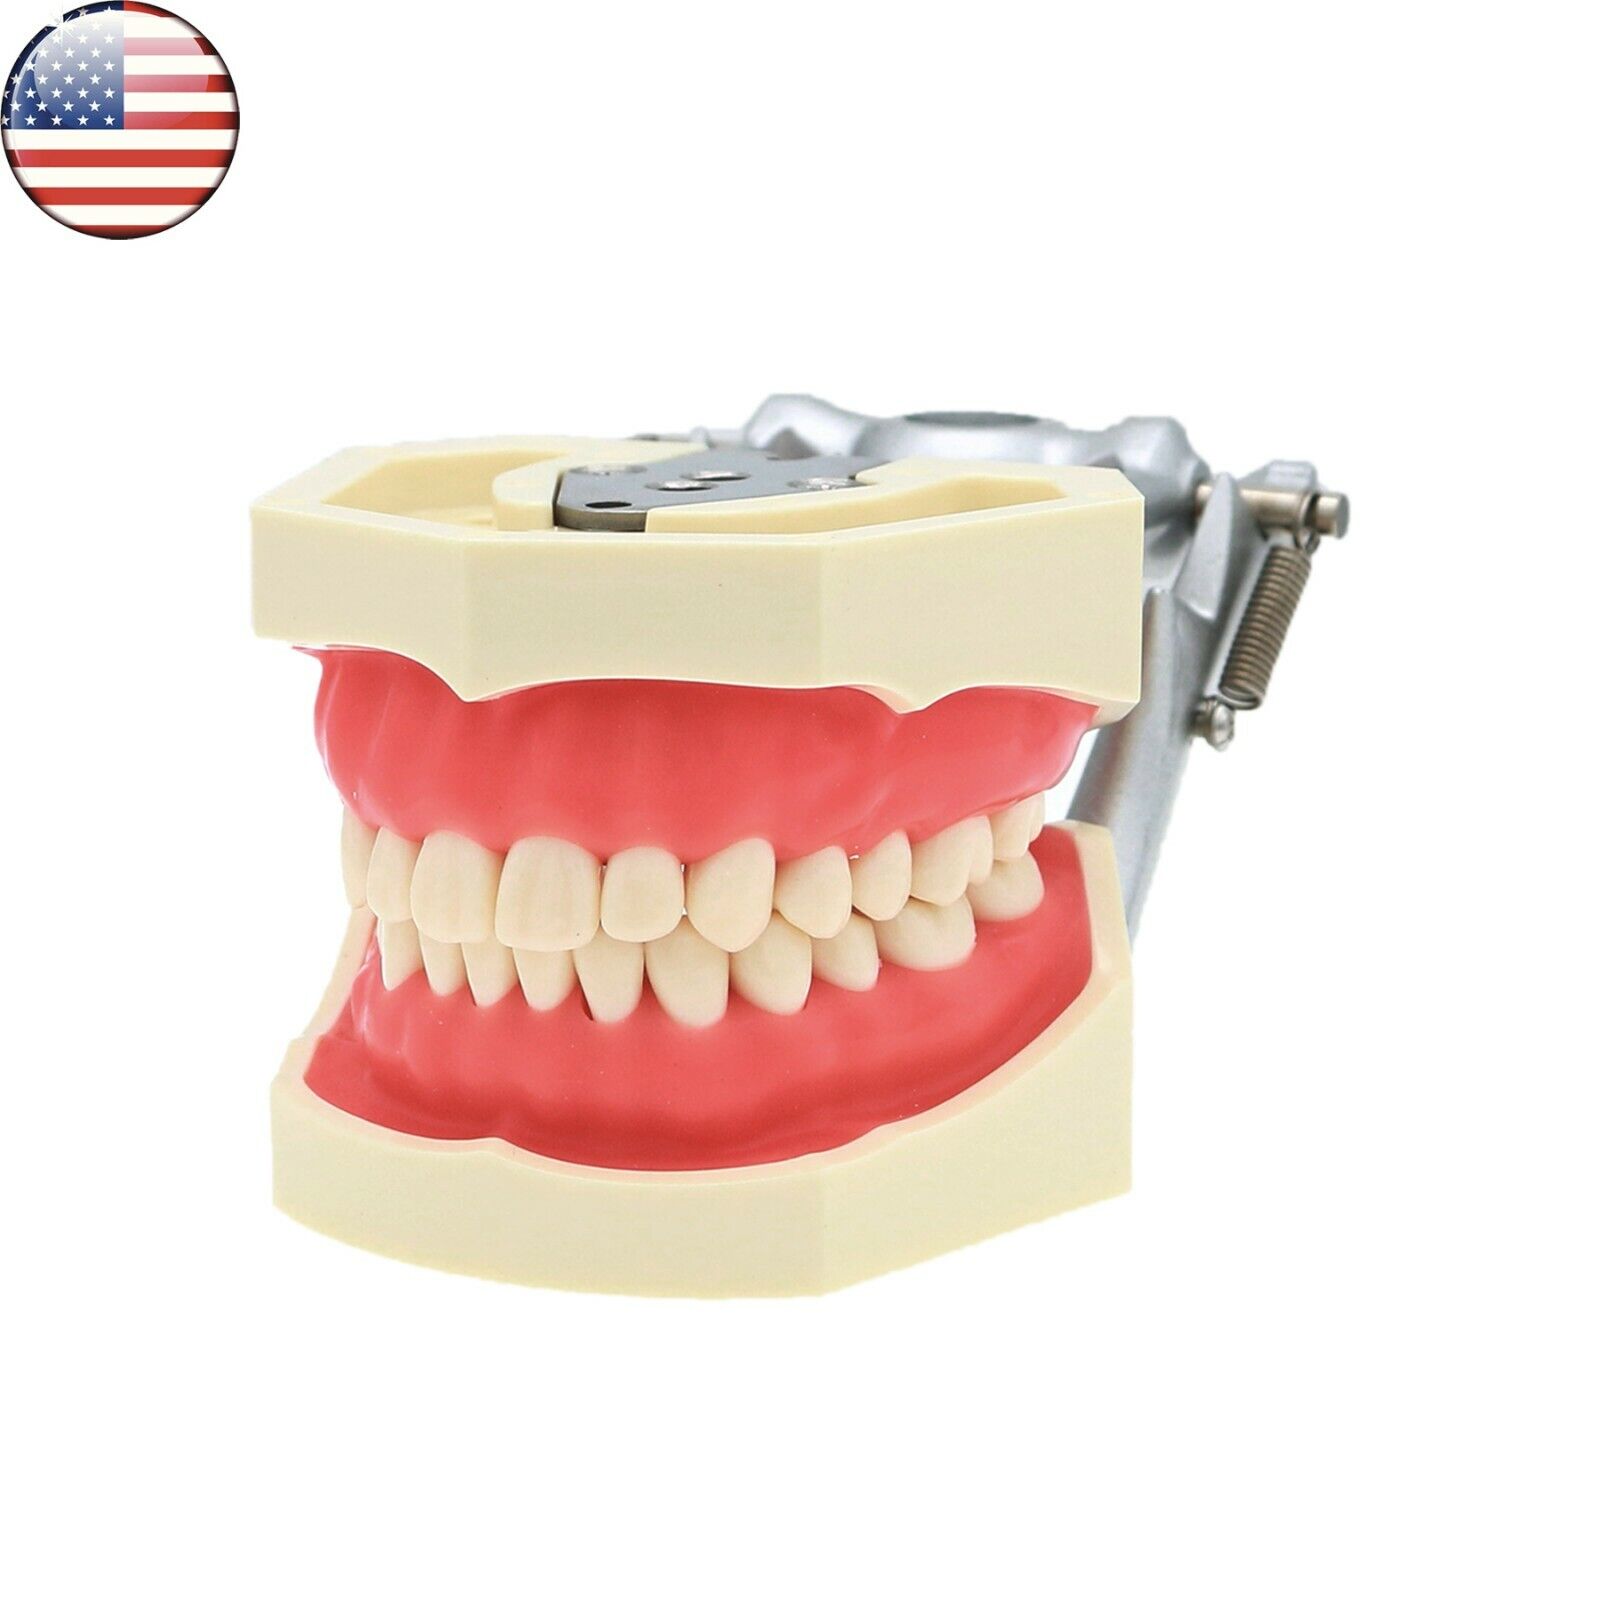 US Dental Typodont Model Kilgore NISSIN 200/500 Type Removable Screw-in Teeth